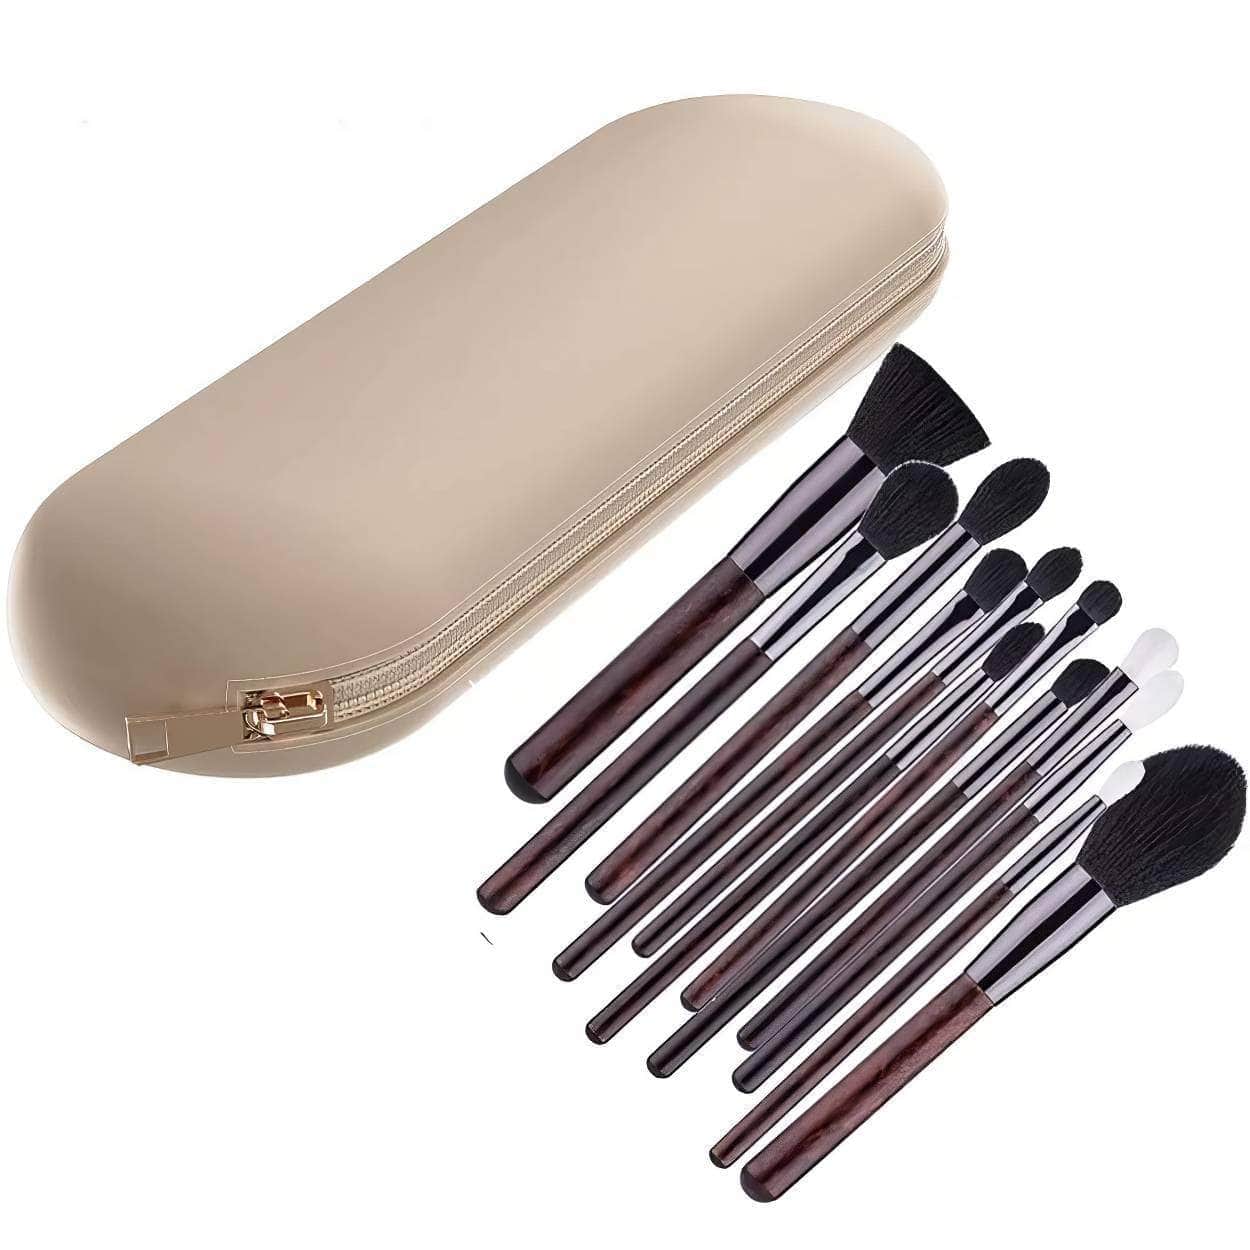 Large Travel Makeup Brush Holder - Silicone Portable Cosmetic Brush Organizer Case, Soft Makeup Brush Purse for Travel